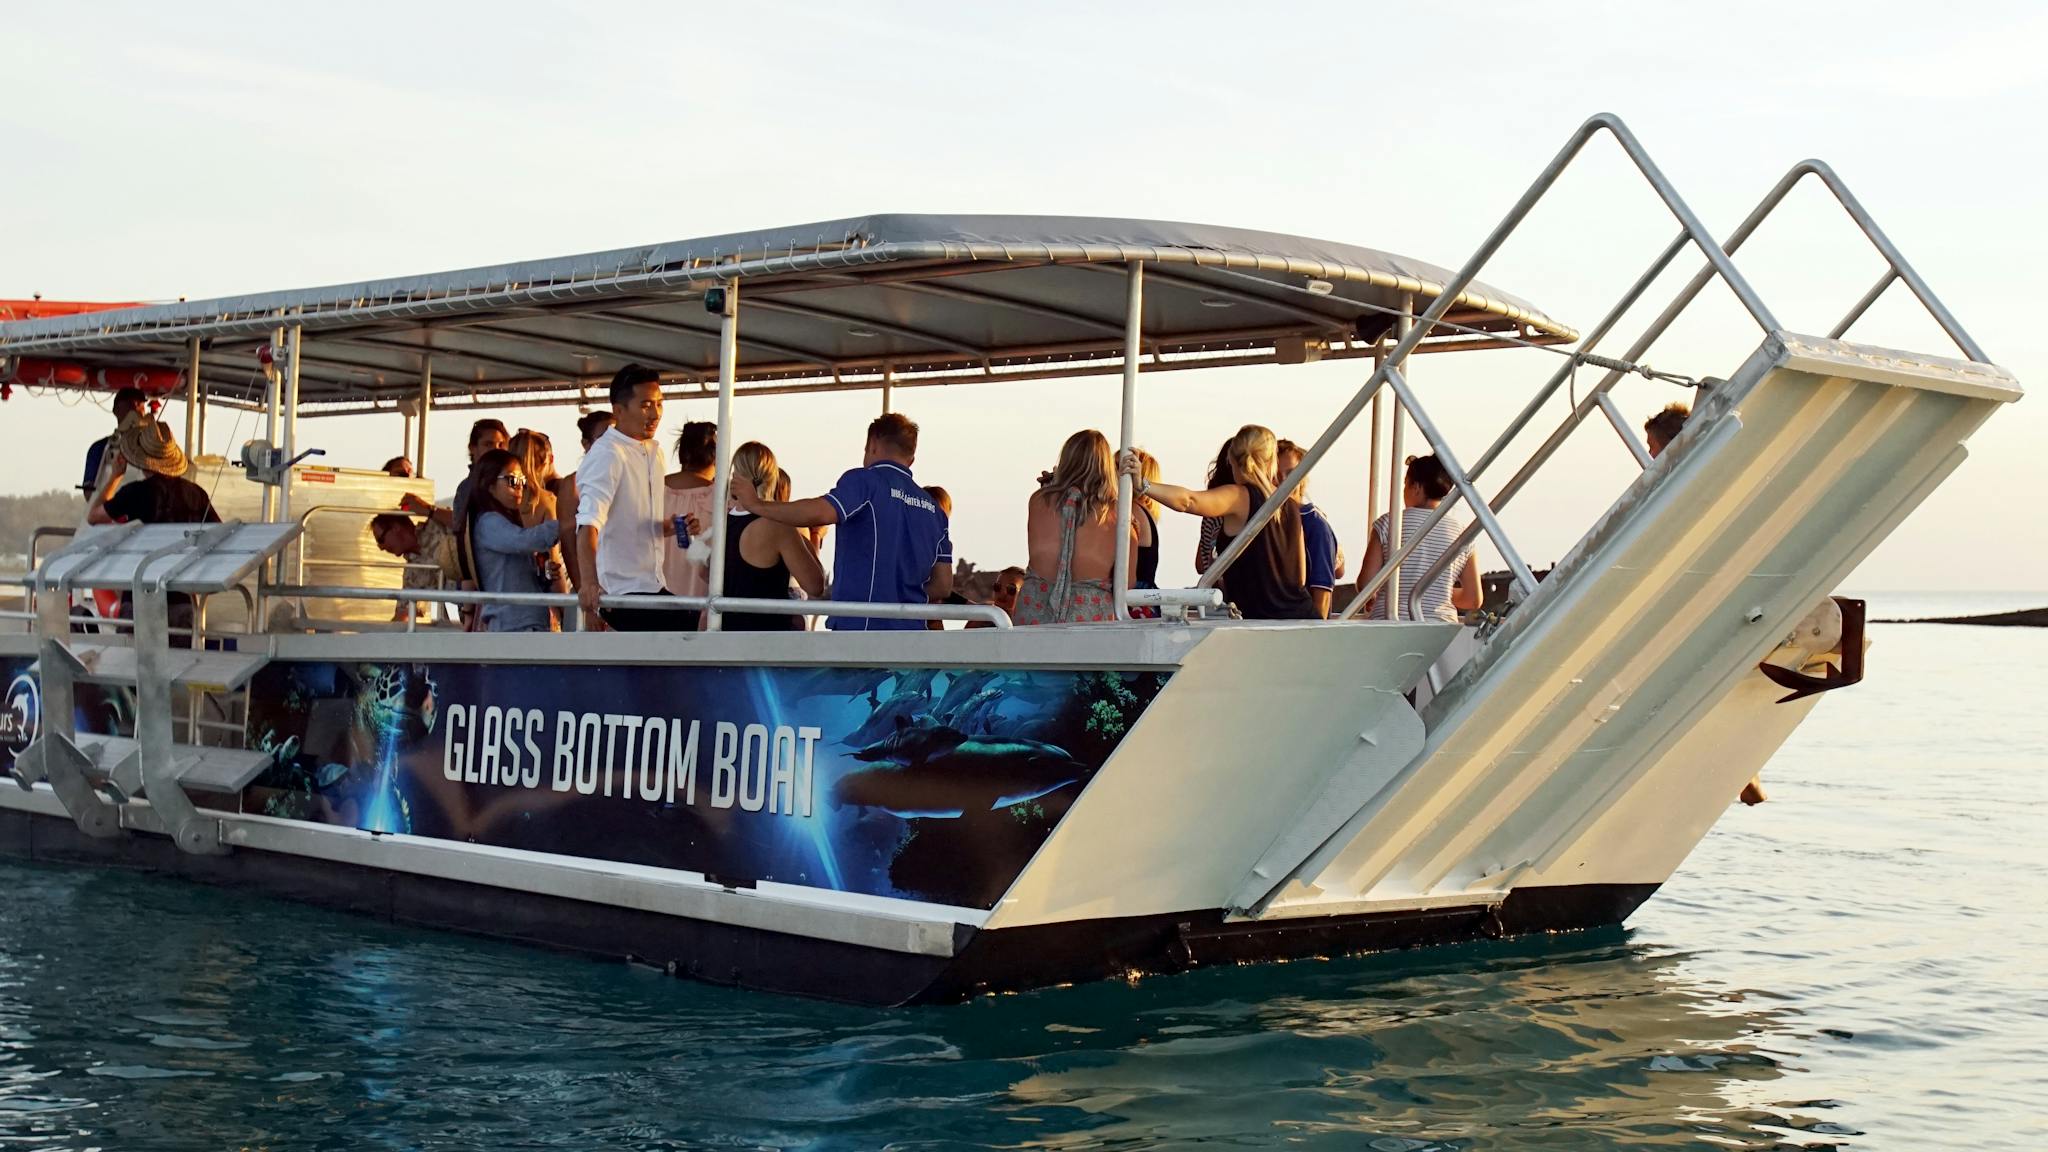 Glass bottom boat